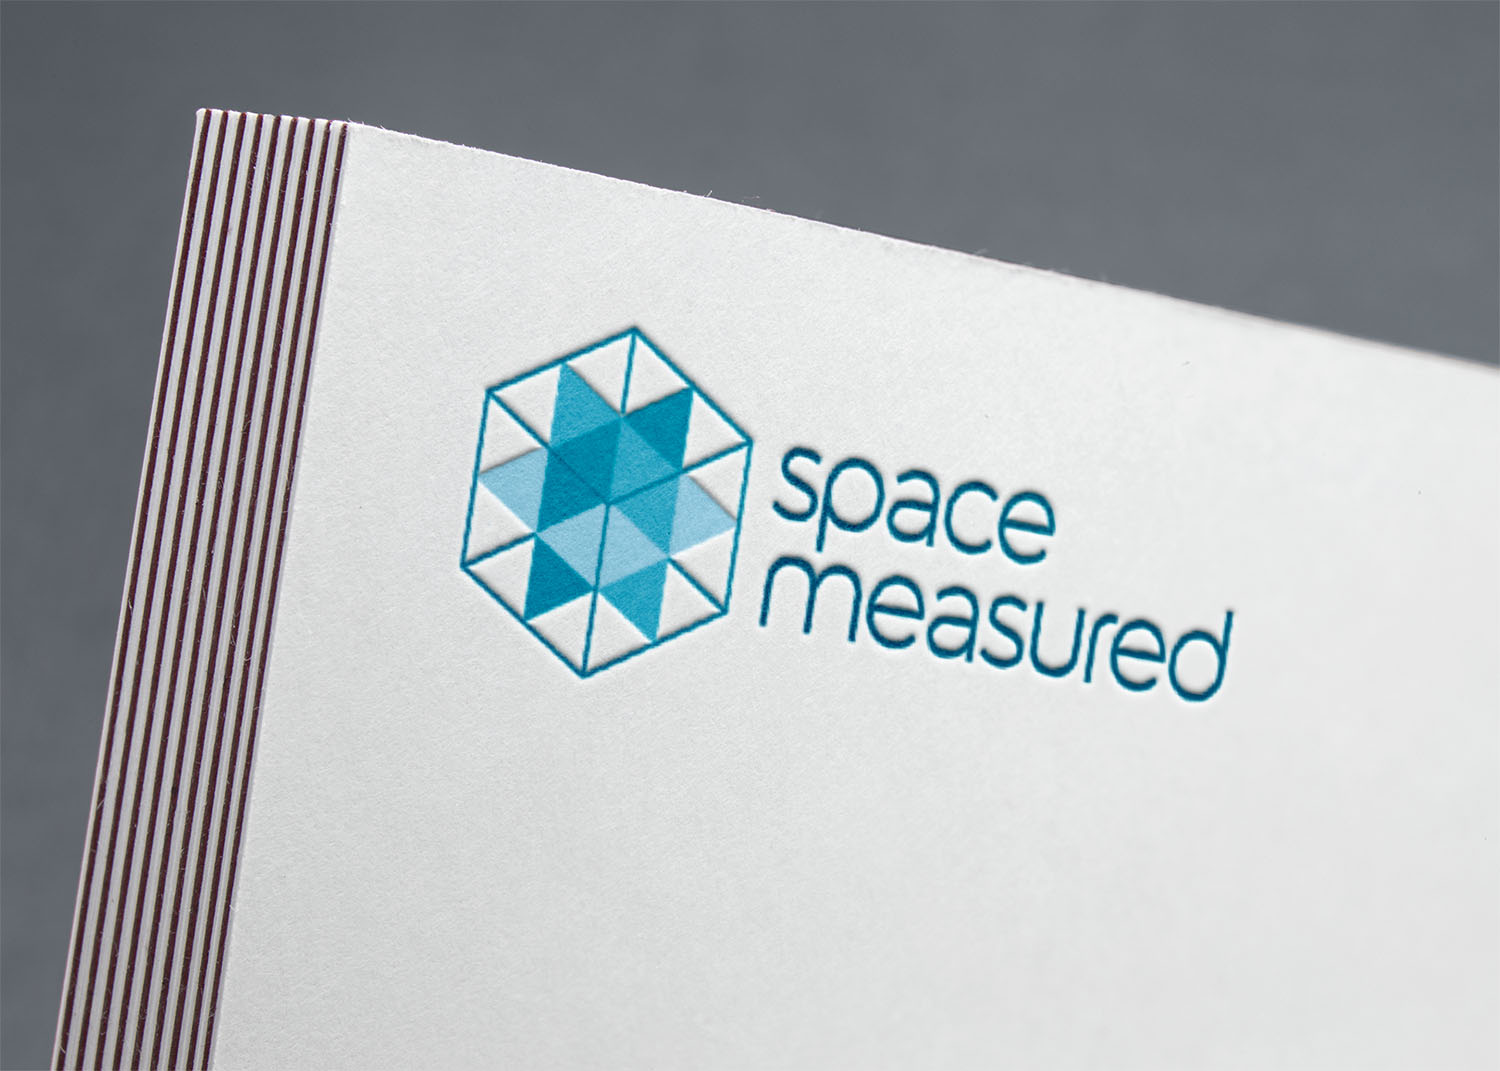 Space Measured Logo Mockup